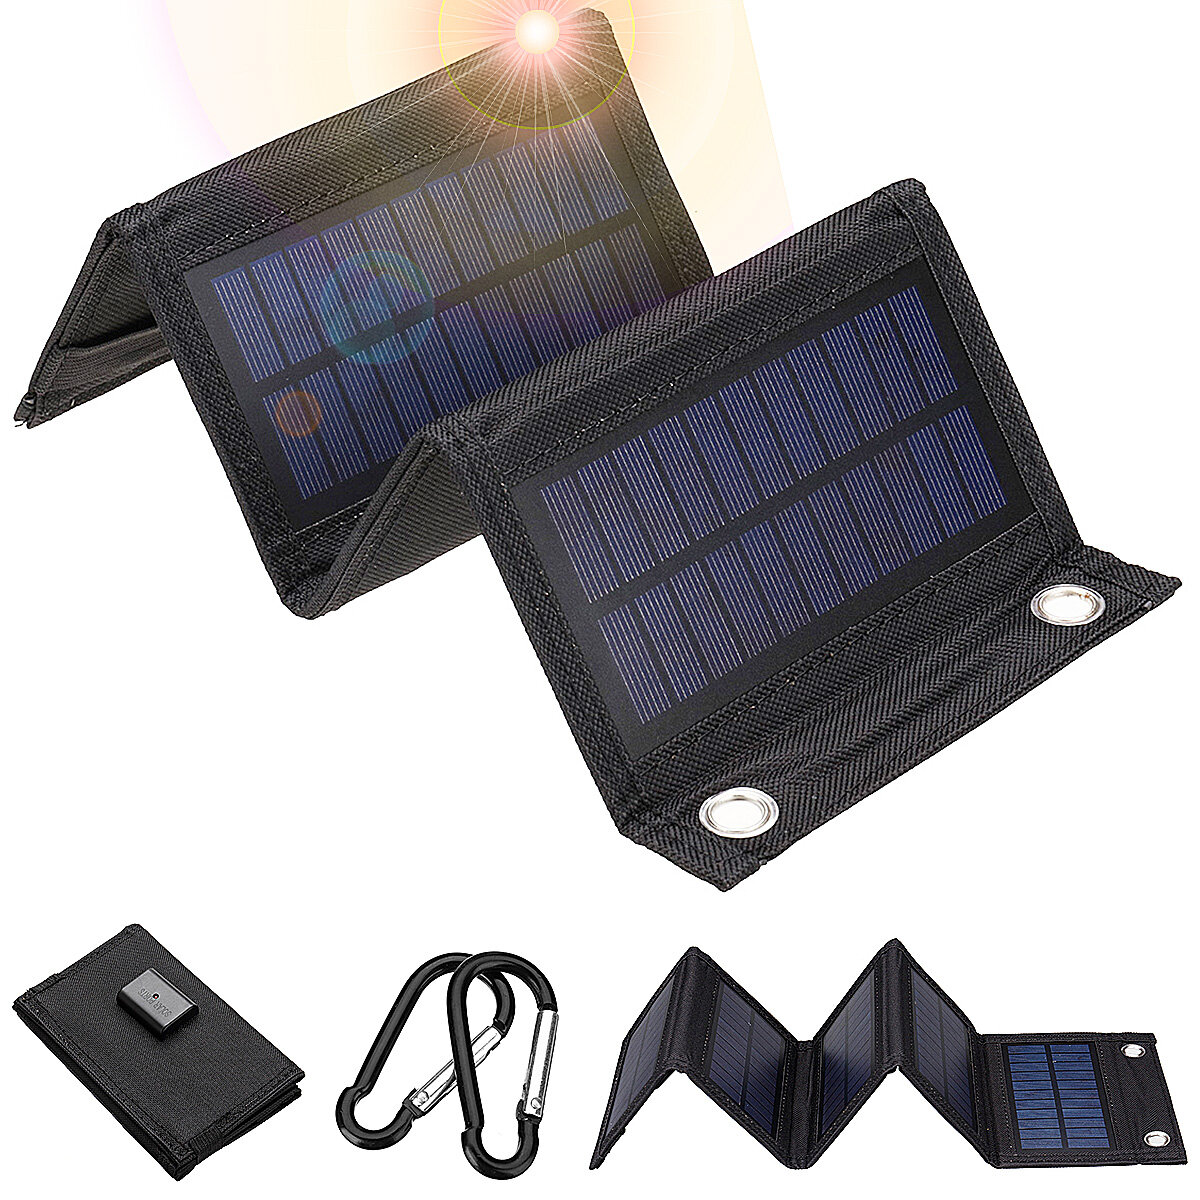 10w/7,5 w/6w plegable Solar Panel Solar celdas cargador 5V USB portátil Solar energía móvil para Smartphone cámping al aire libre